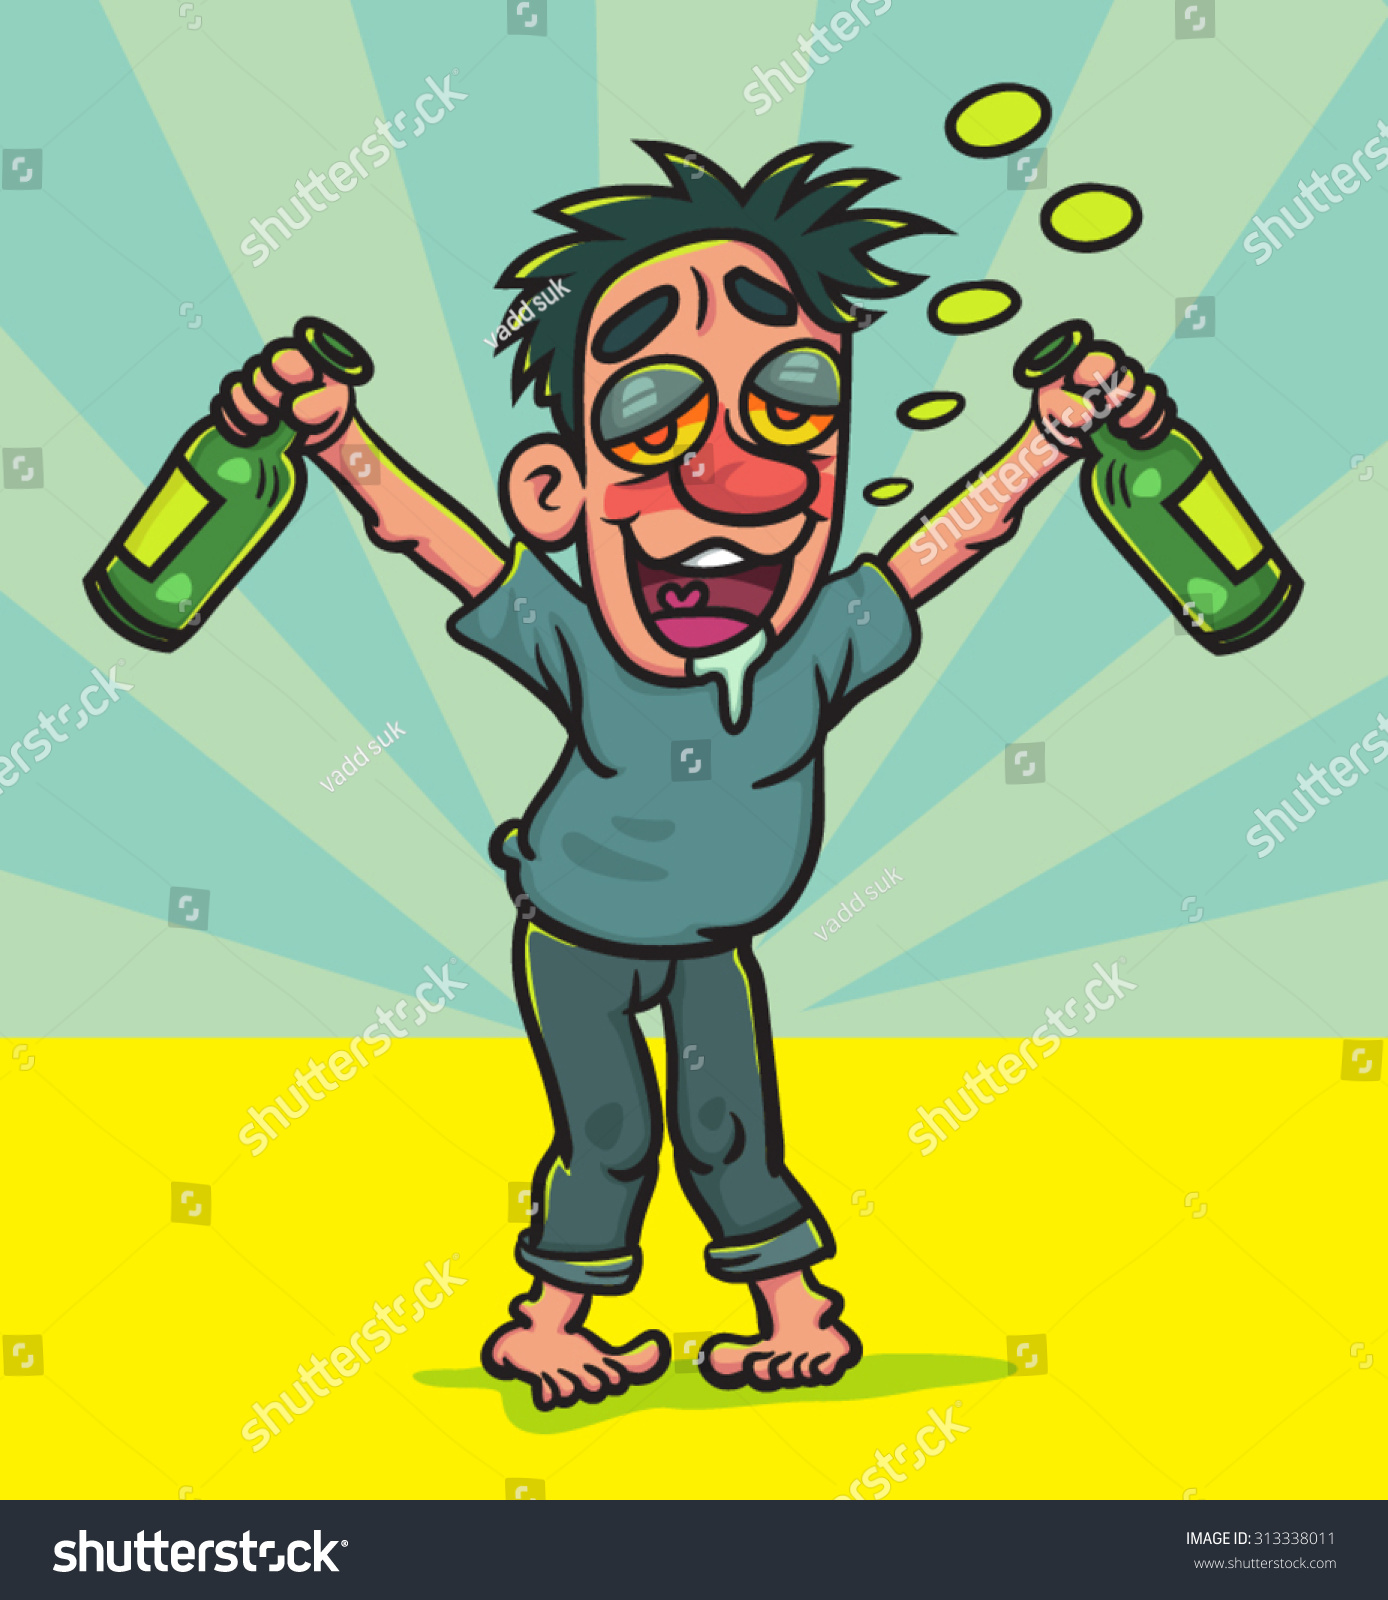 Cartoon Drunk Man Holding Bottle, Illustration - 313338011 : Shutterstock